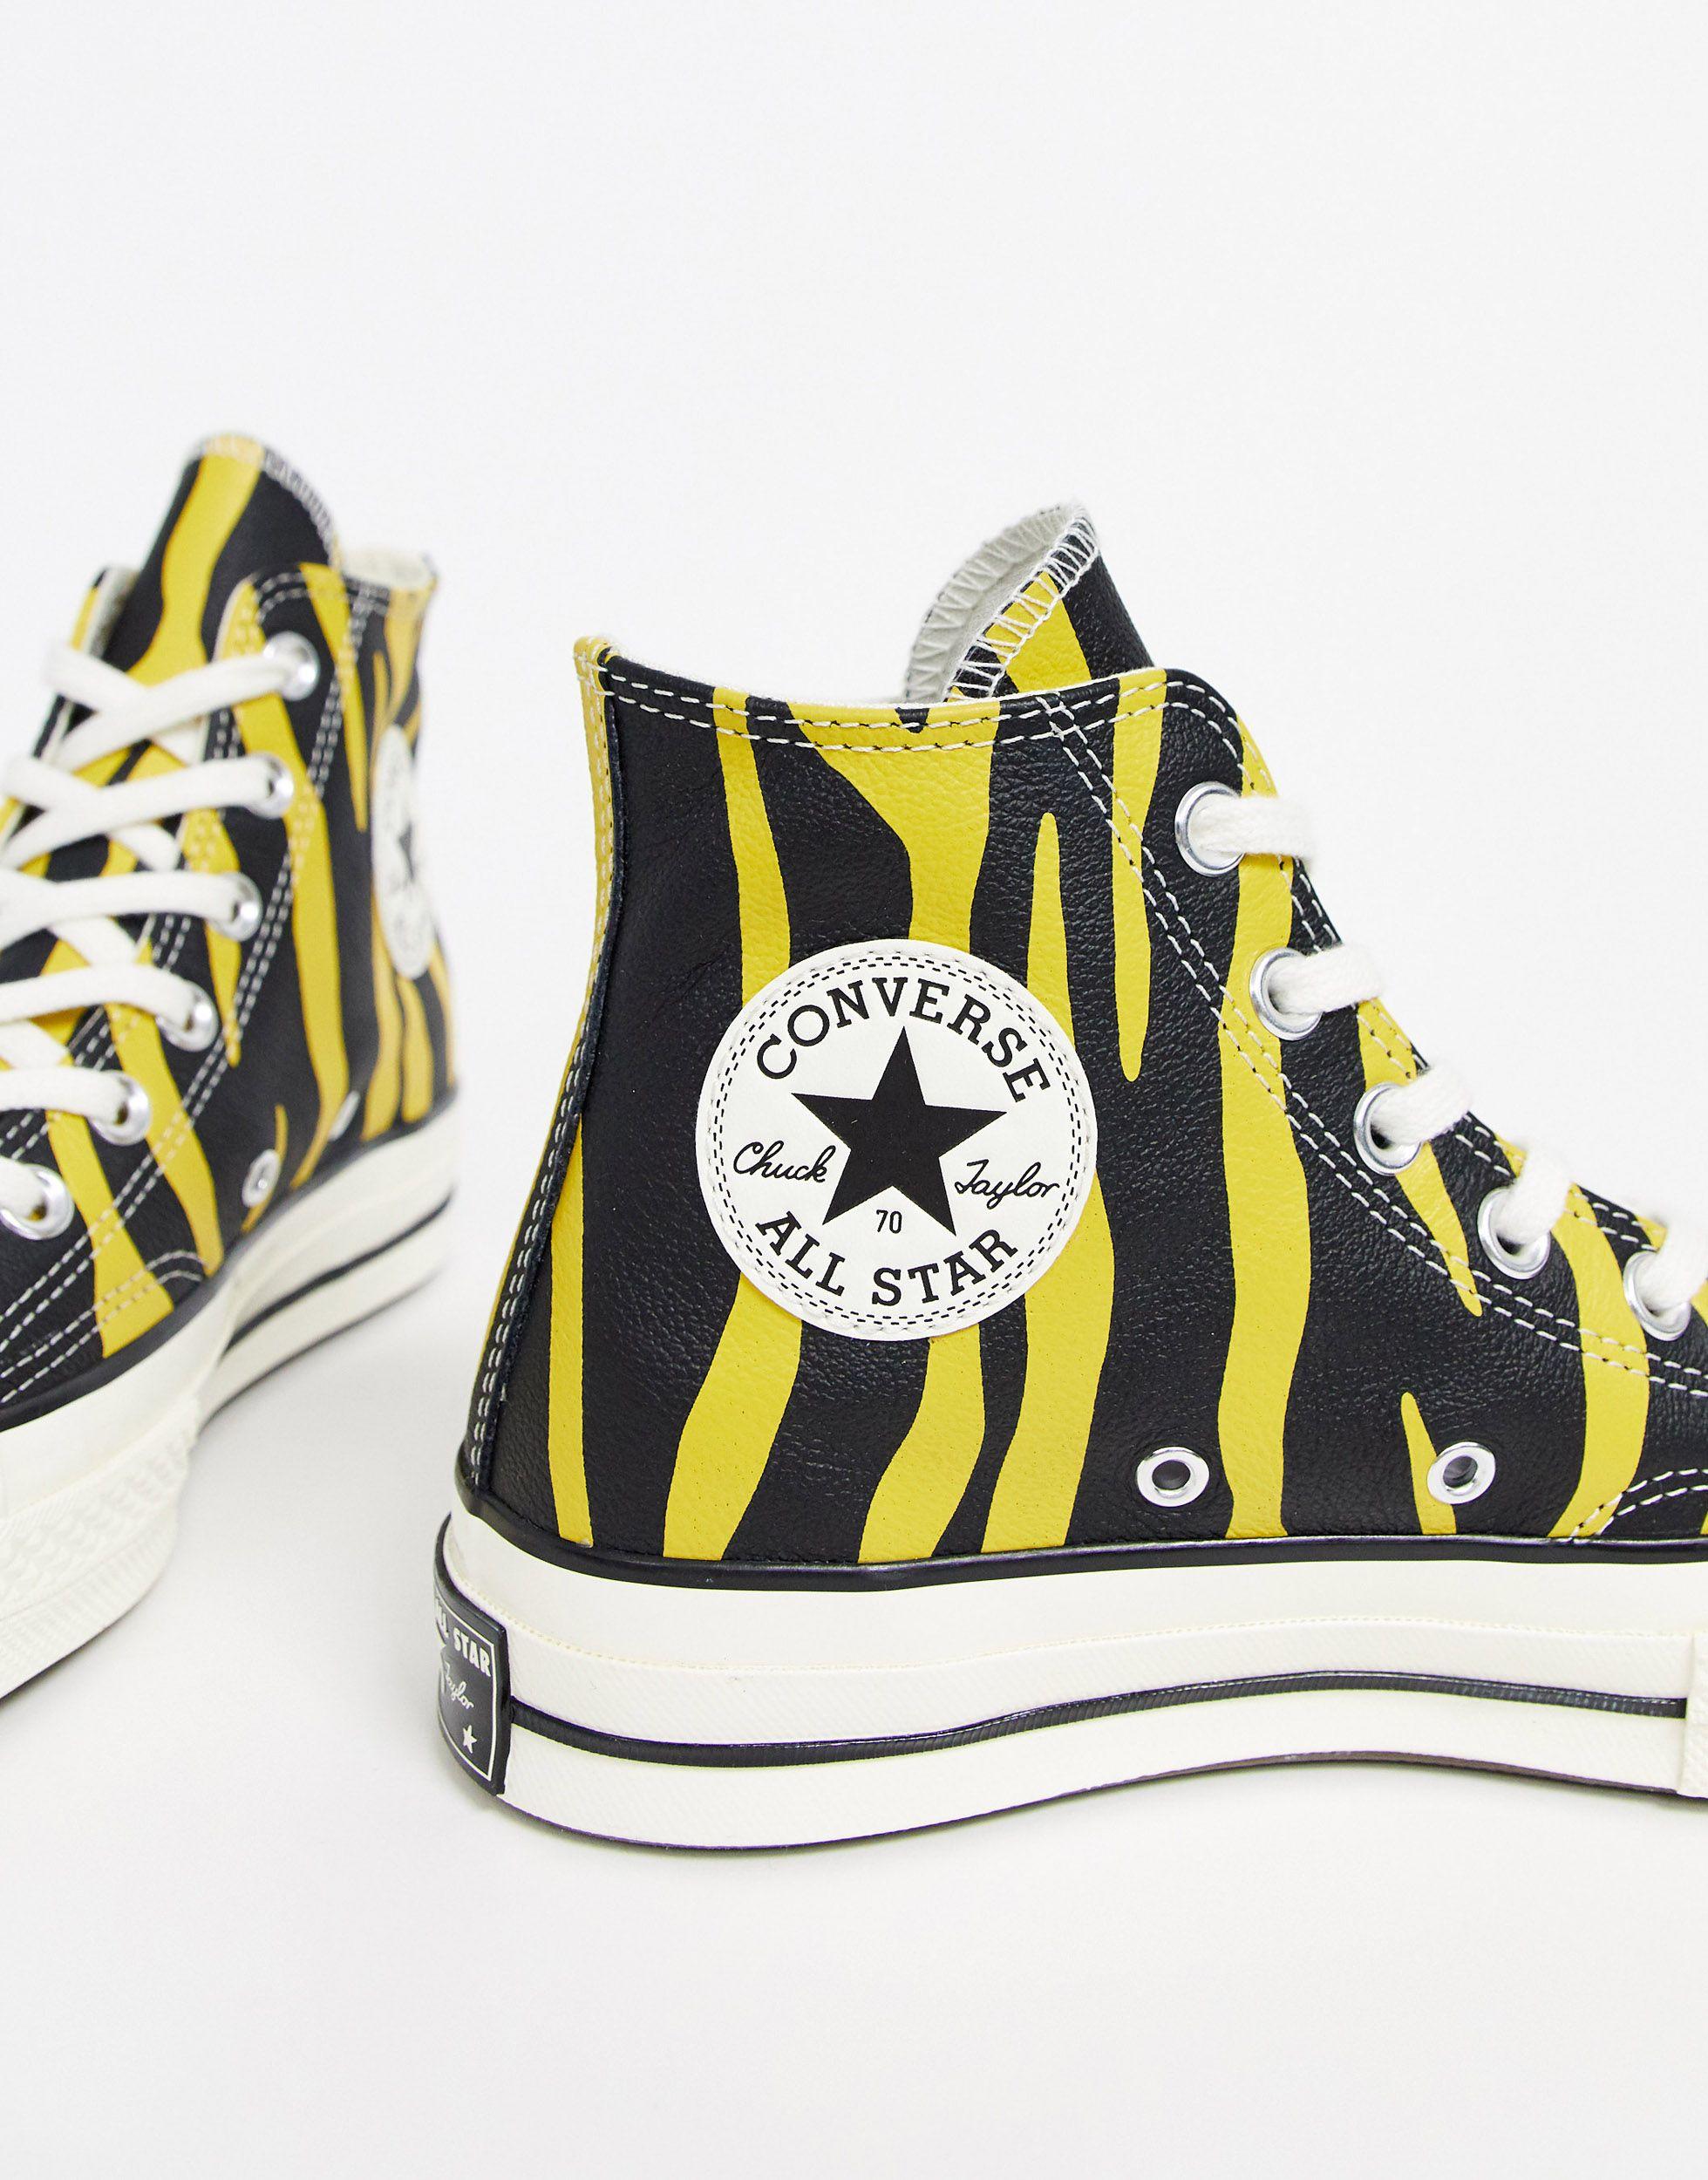 Converse Chuck 70 Hi Yellow Zebra Print Sneakers | Lyst